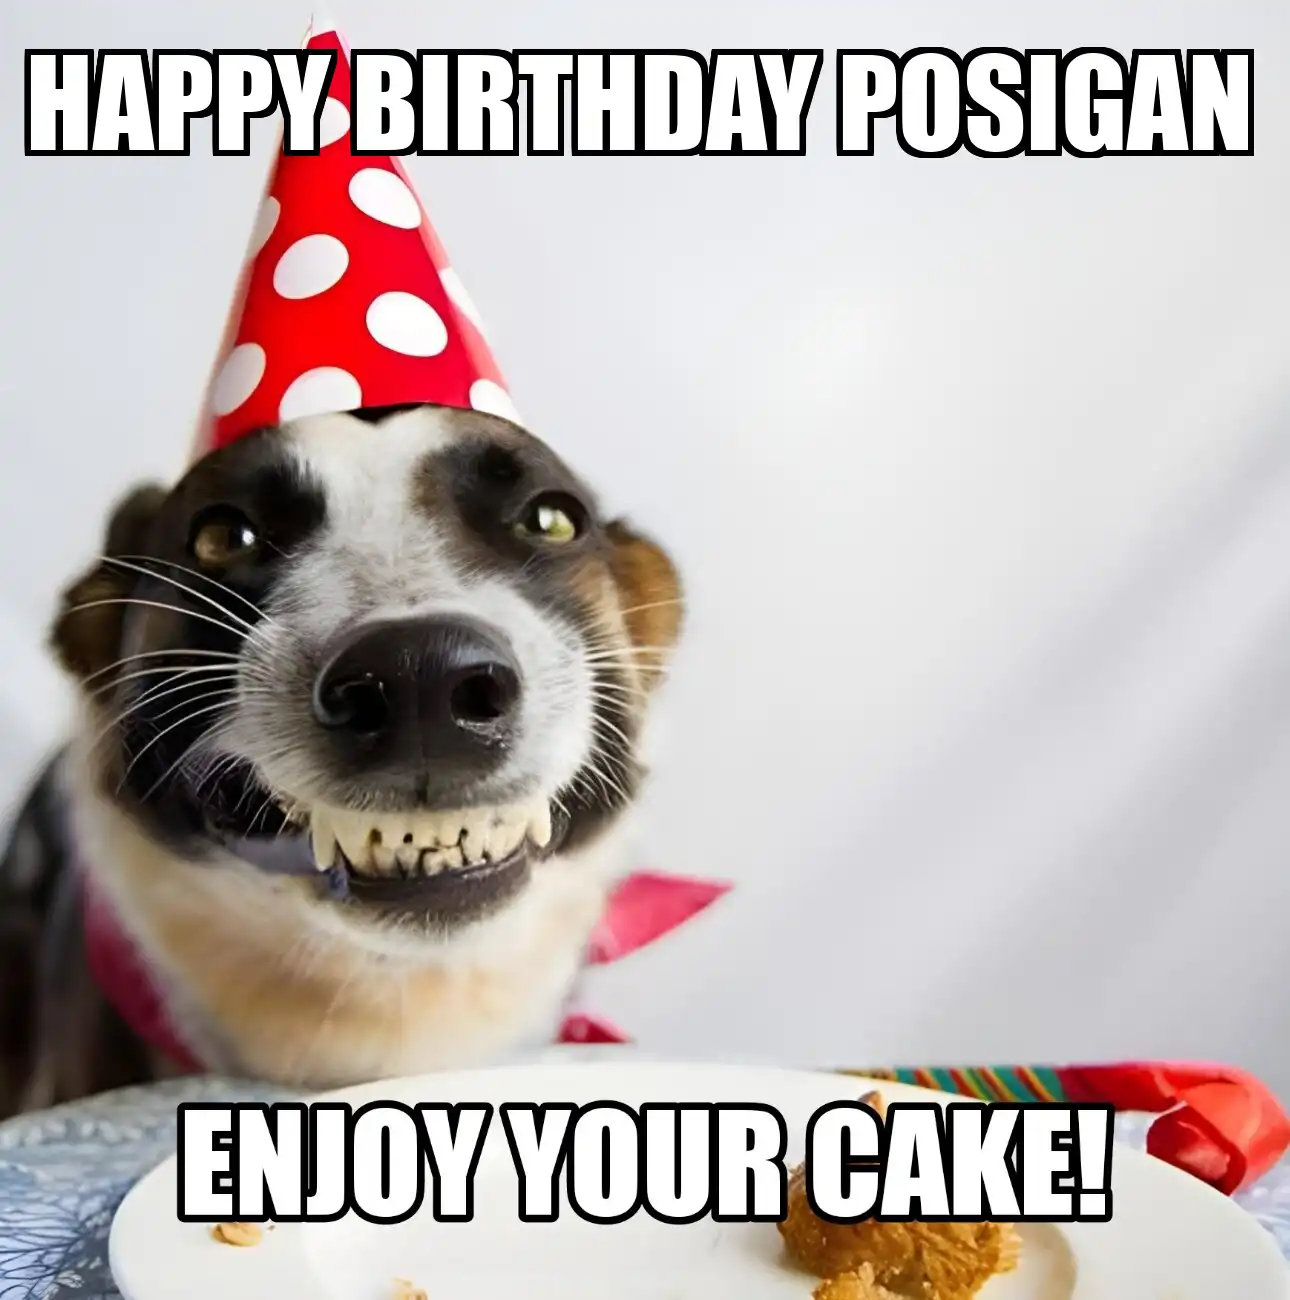 Happy Birthday Posigan Enjoy Your Cake Dog Meme